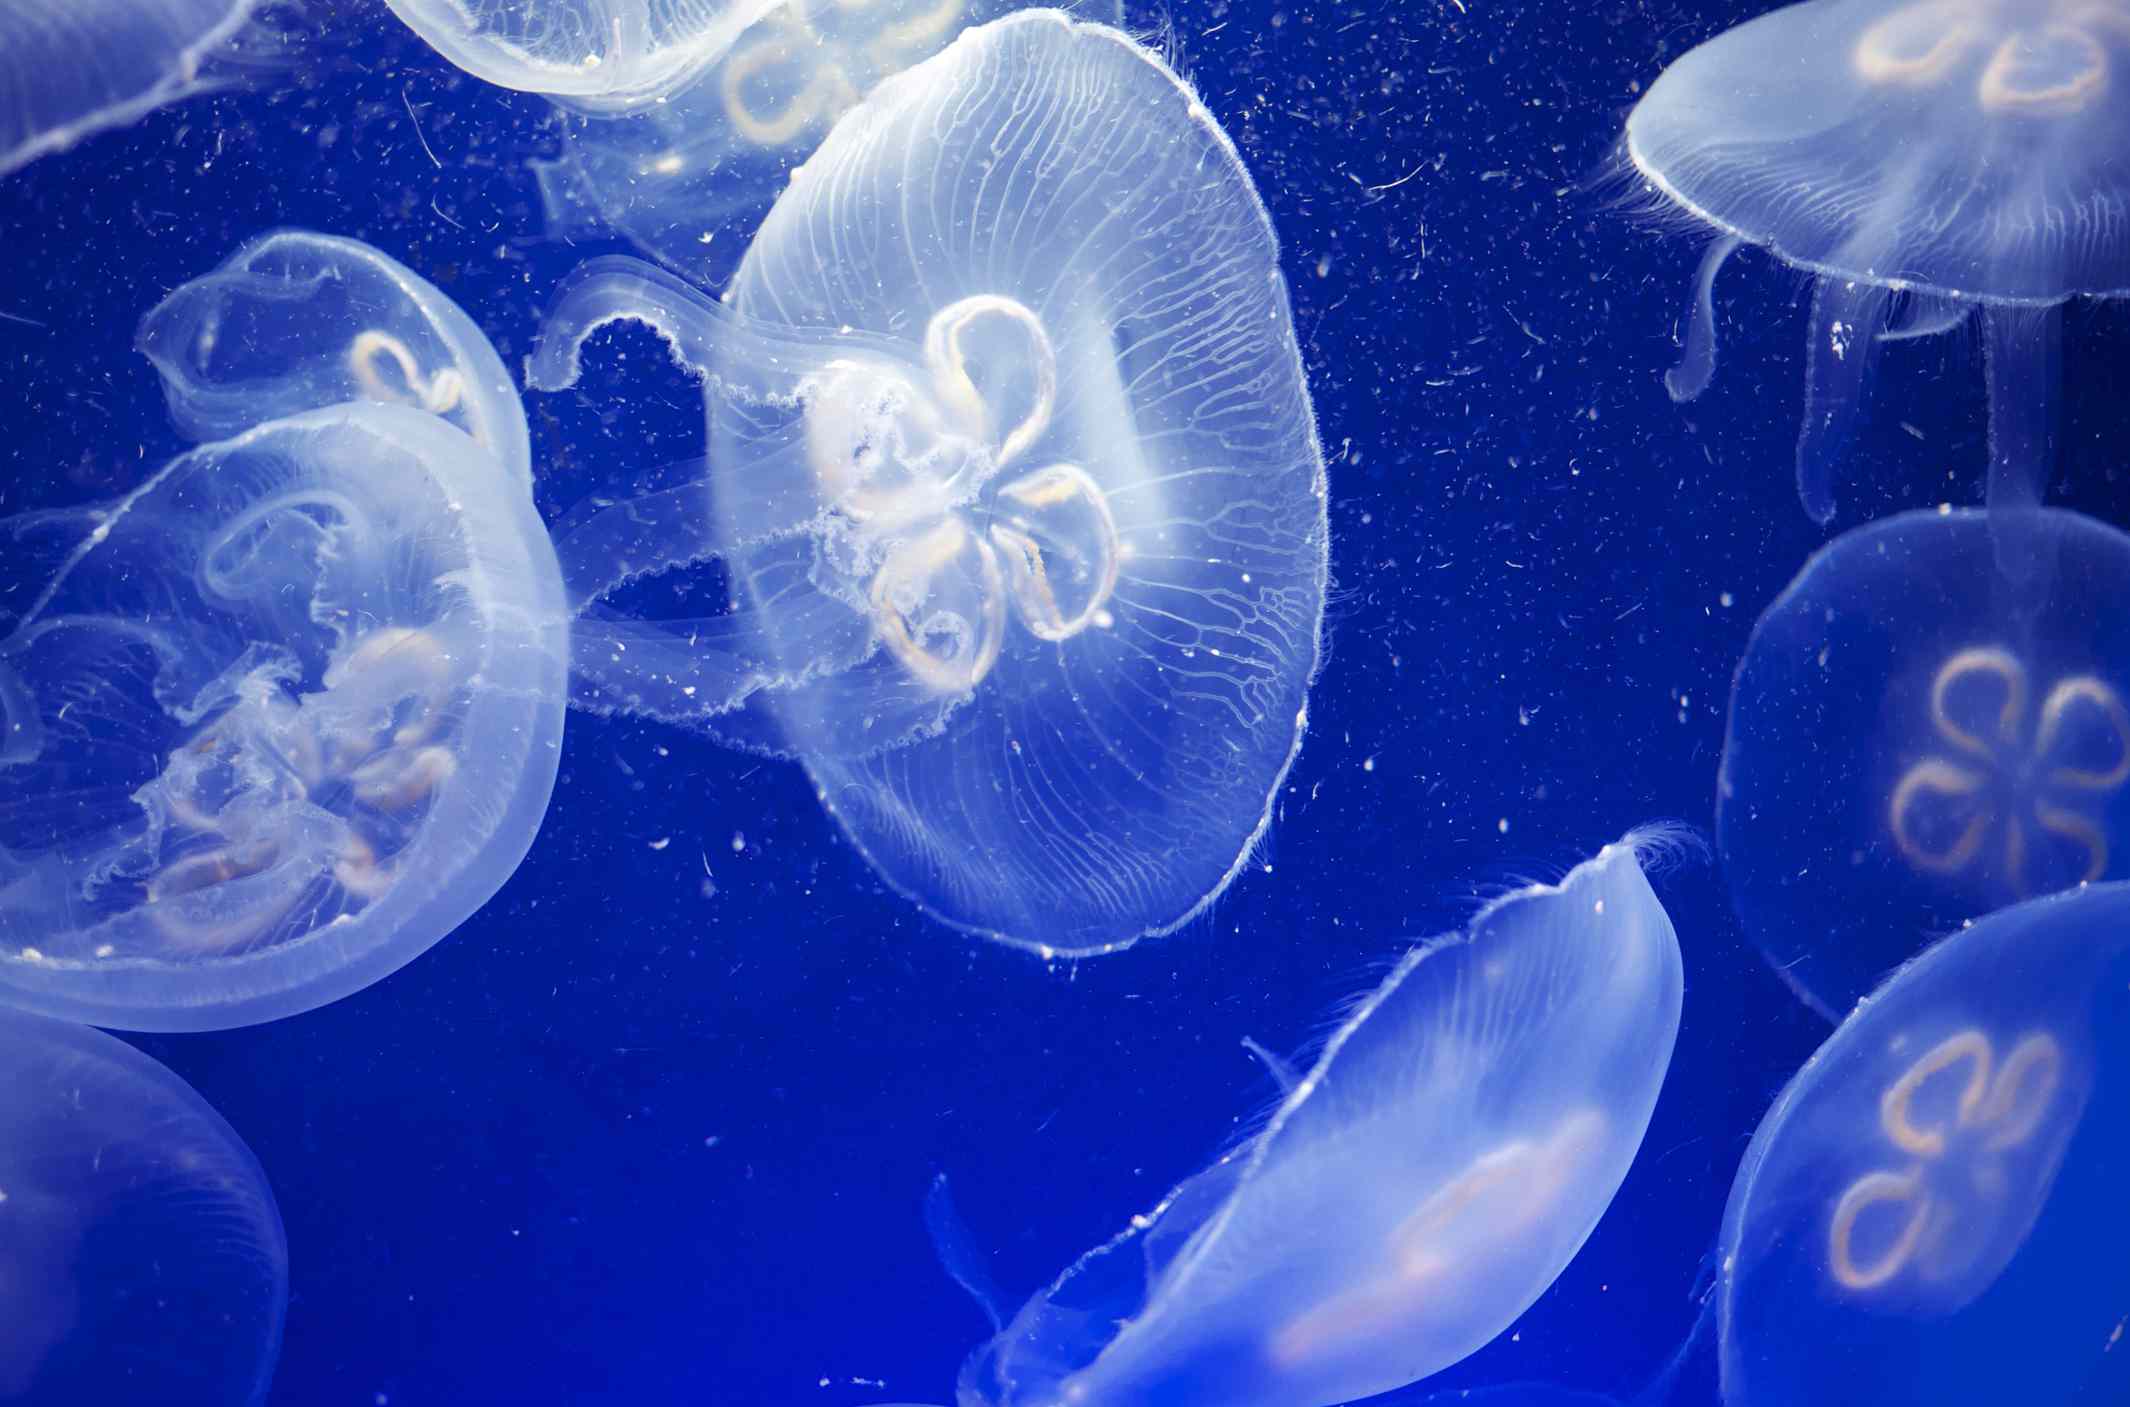 Varias medusas luna translúcidas flotando en agua azul brillante